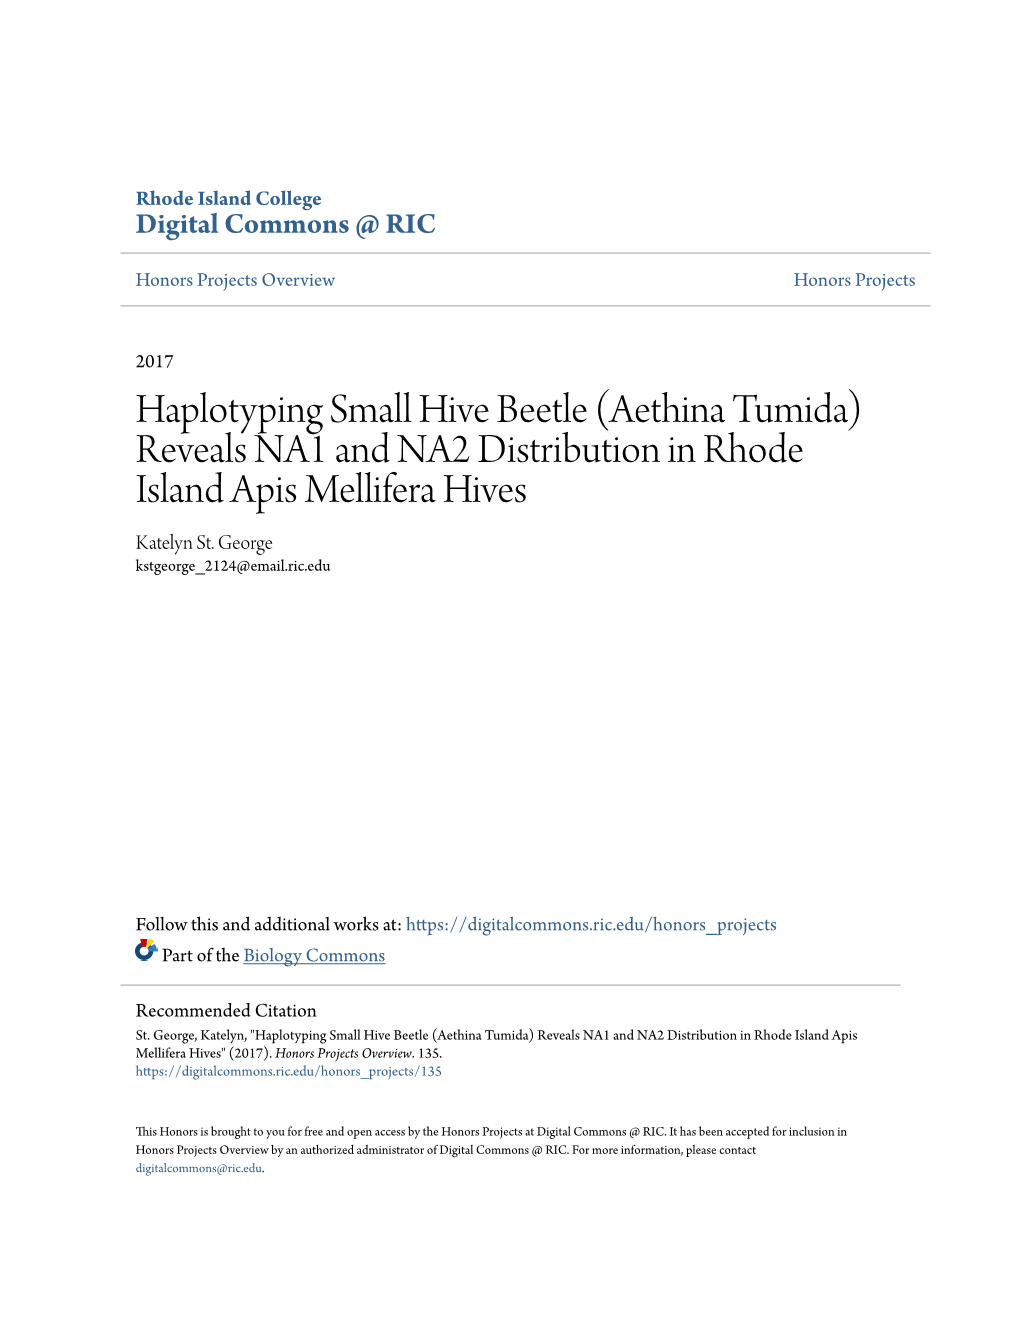 Haplotyping Small Hive Beetle (Aethina Tumida) Reveals NA1 and NA2 Distribution in Rhode Island Apis Mellifera Hives Katelyn St